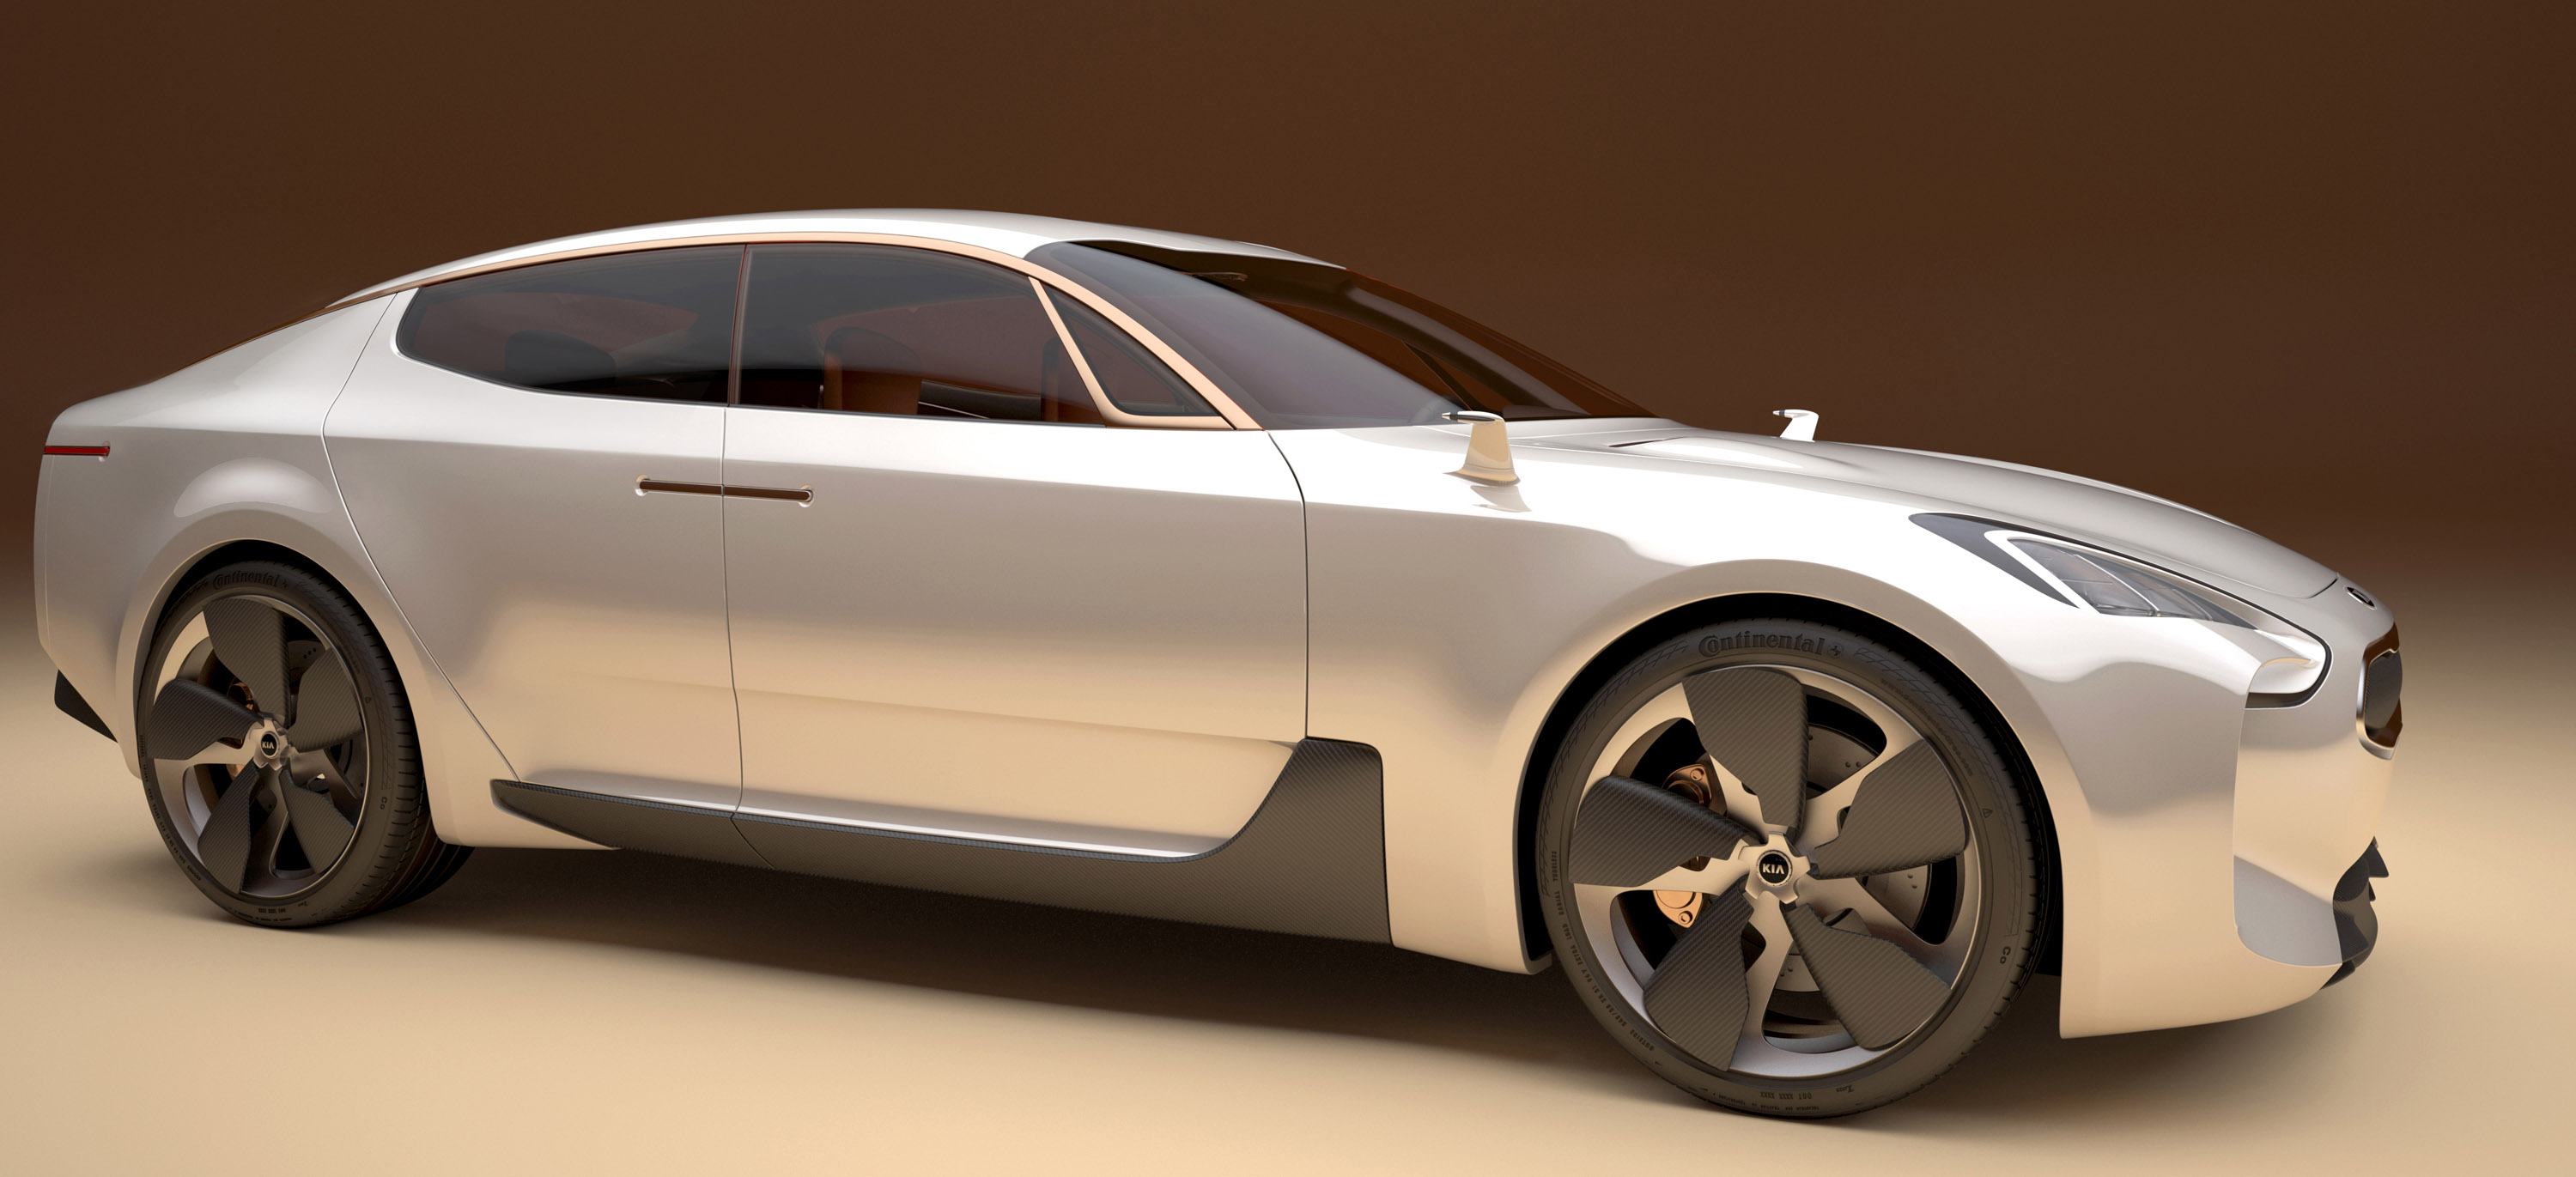 KIA Four-door Sports Sedan Concept